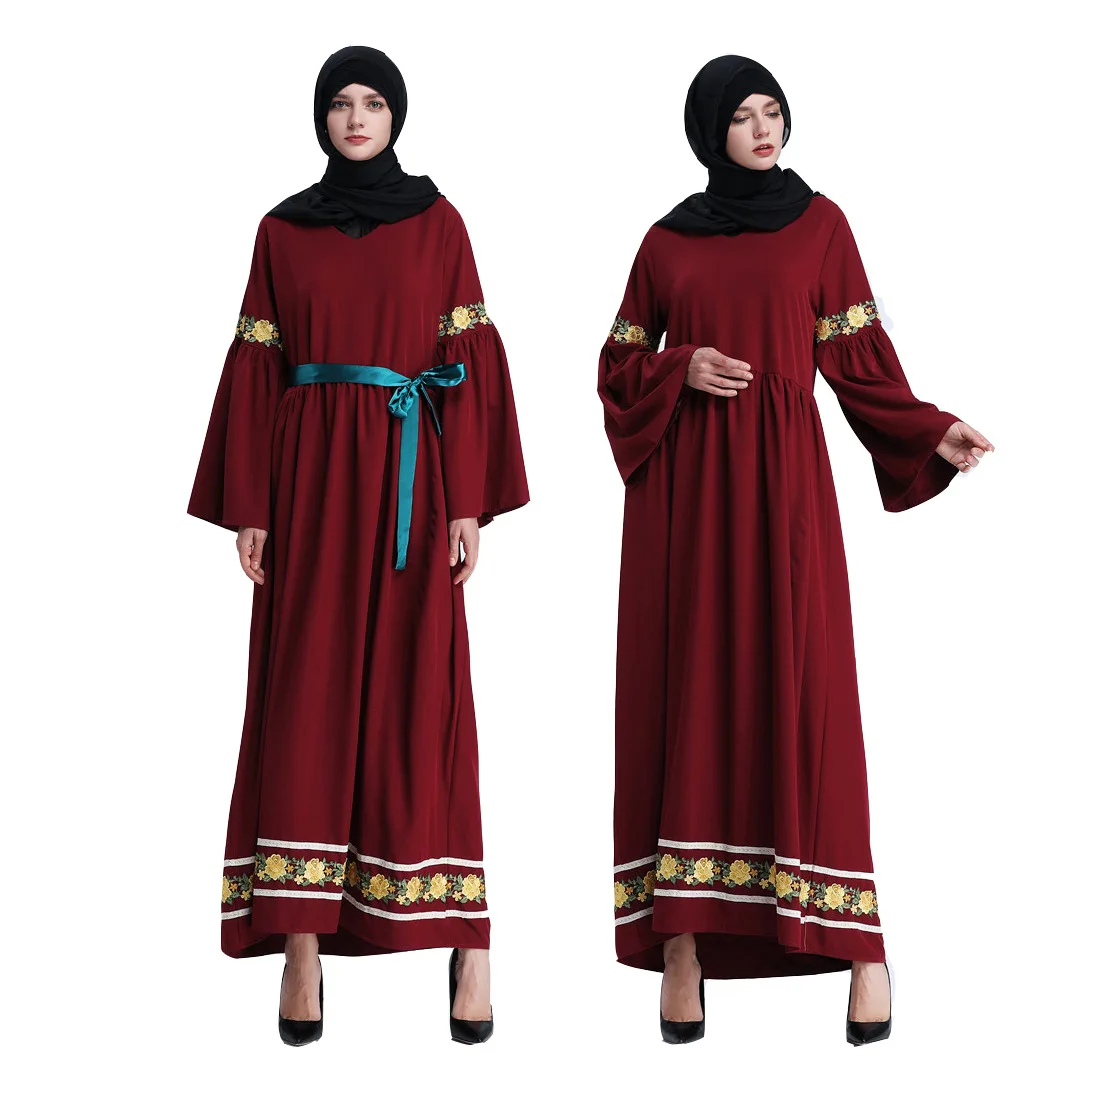 

8013 kuwii Muslin flared sleeve dress women's Arab robe new abaya designs 2021 abaya islamic clothing muslim dress abaya, Burgundy